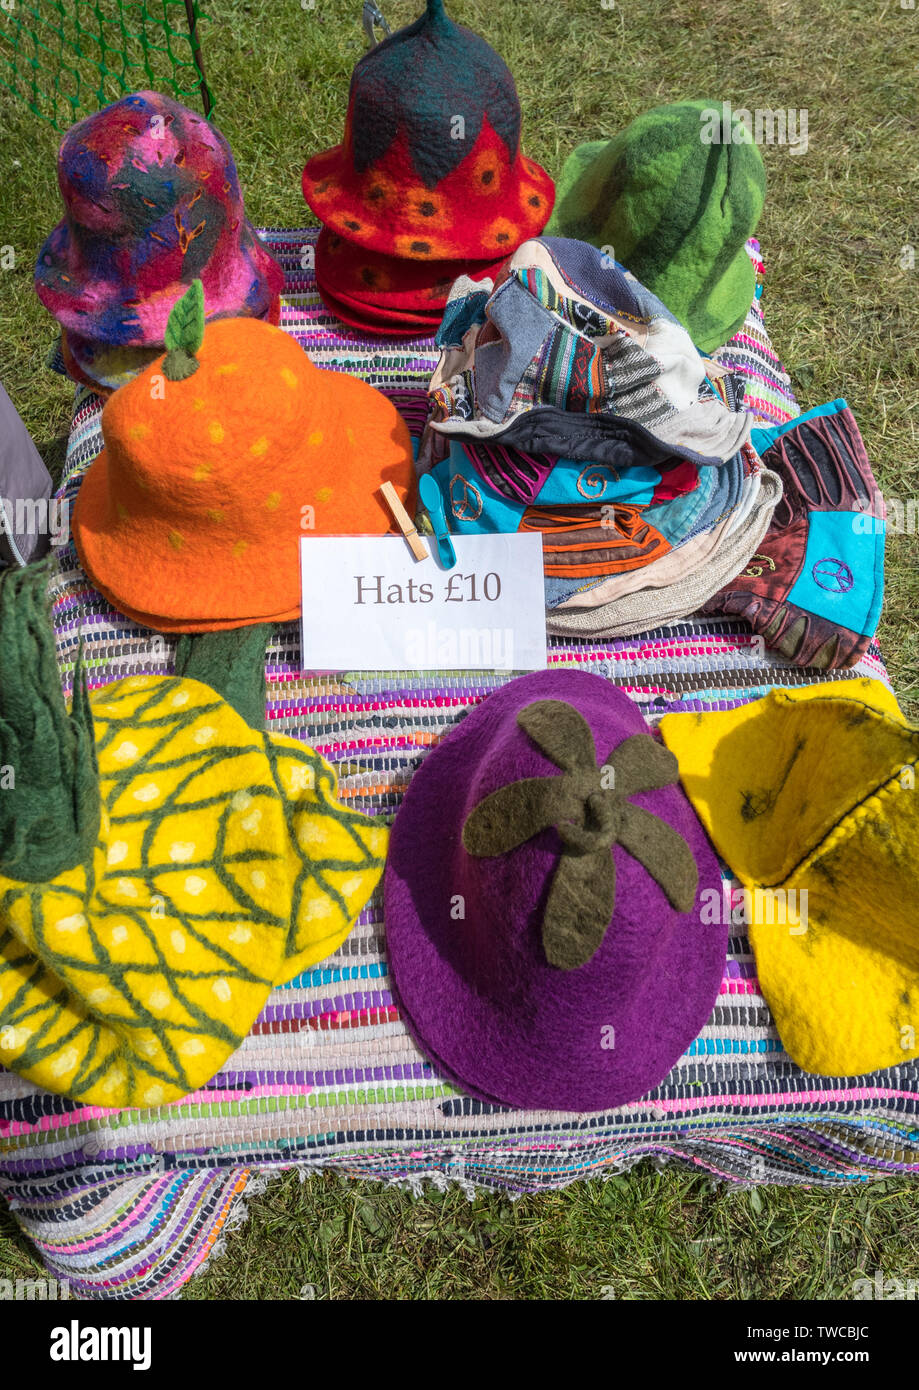 Colourful felt floppy hats for sale Stock Photo - Alamy